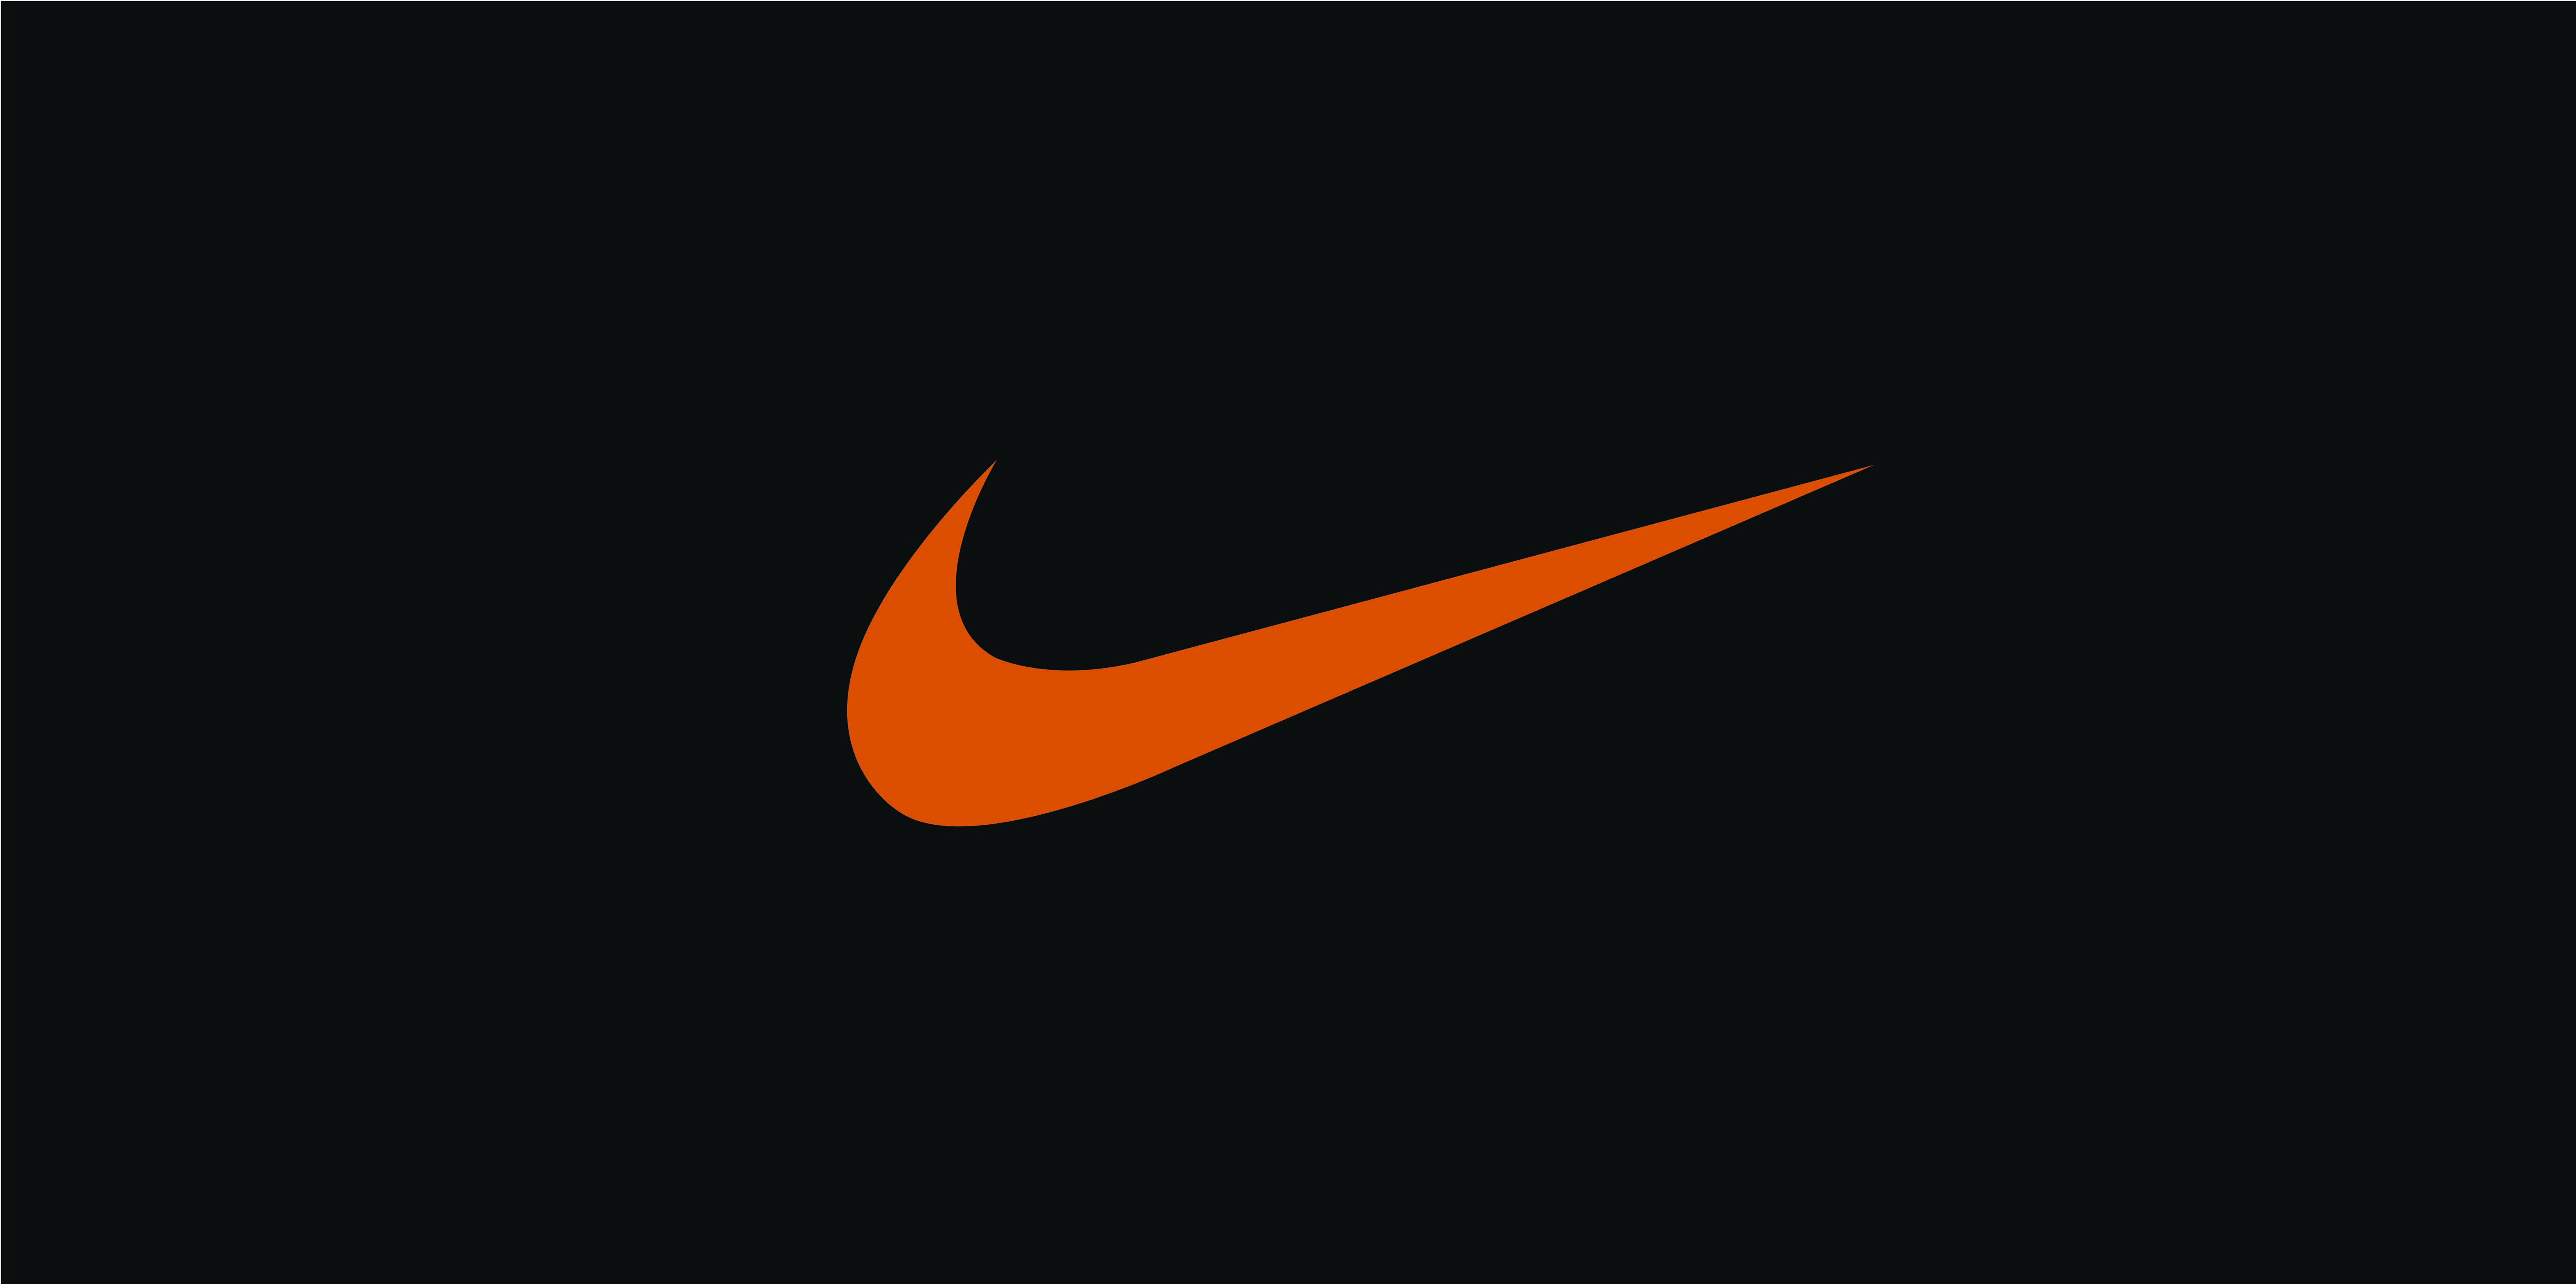 Cool Nike Logos 19 103014 Image HD Wallpaper. Wallfoy.com